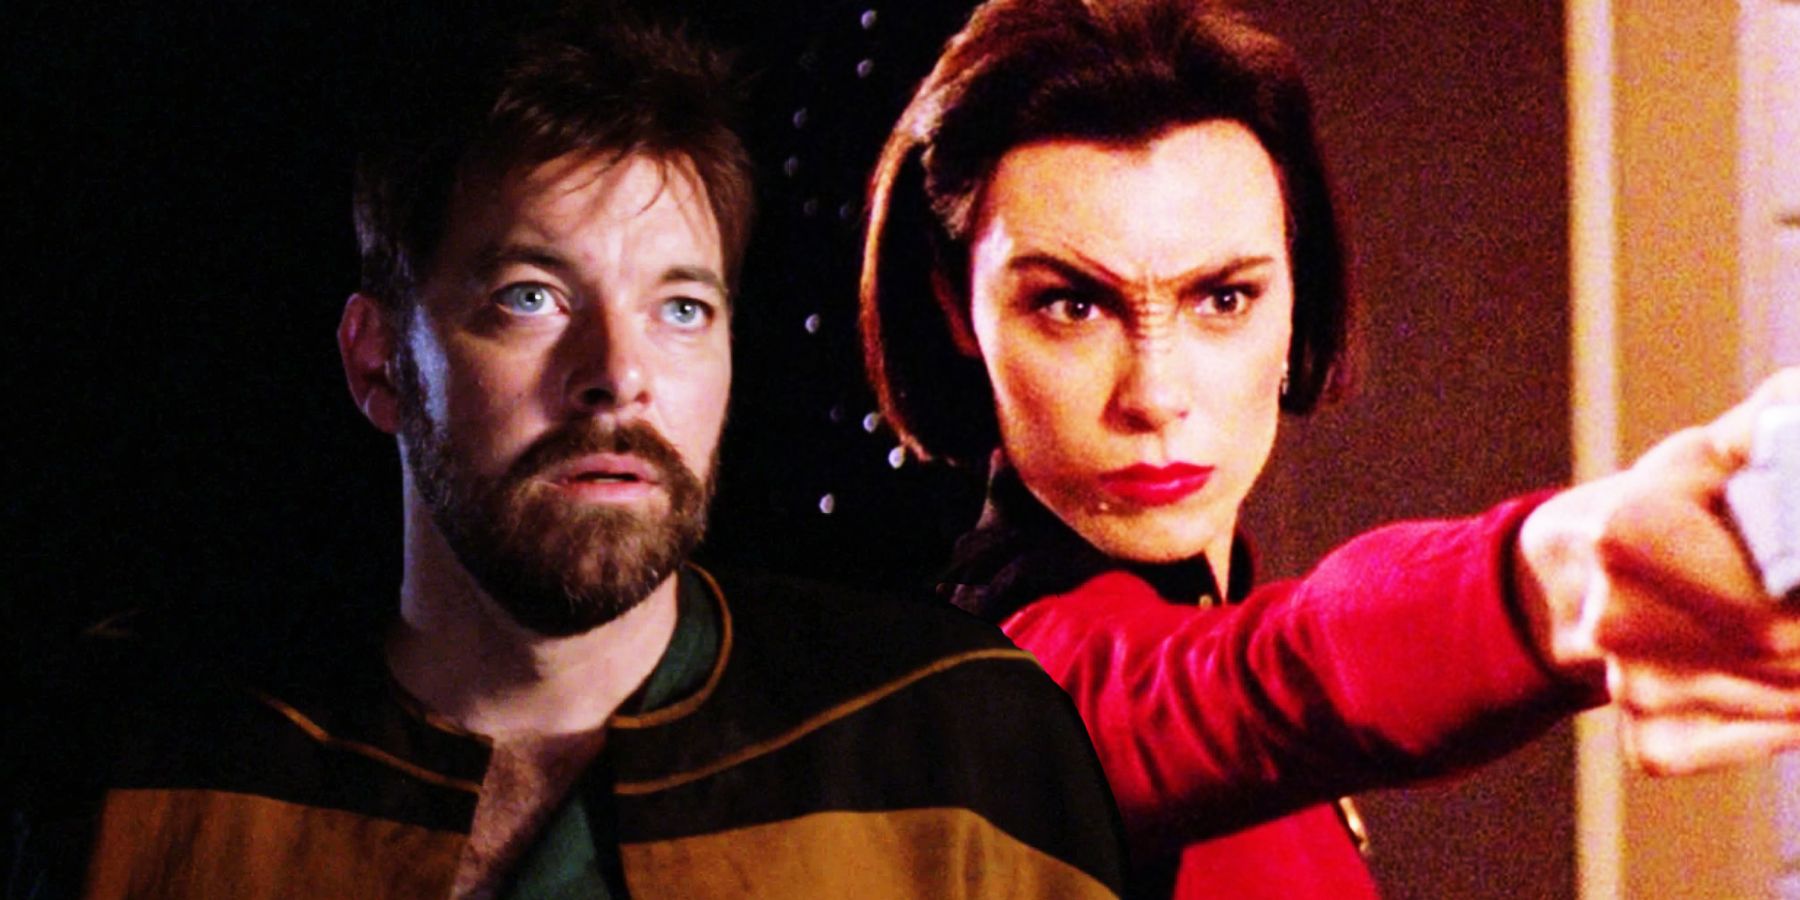 Maquis members Thomas Riker and Ro Laren in Star Trek: The Next Generation